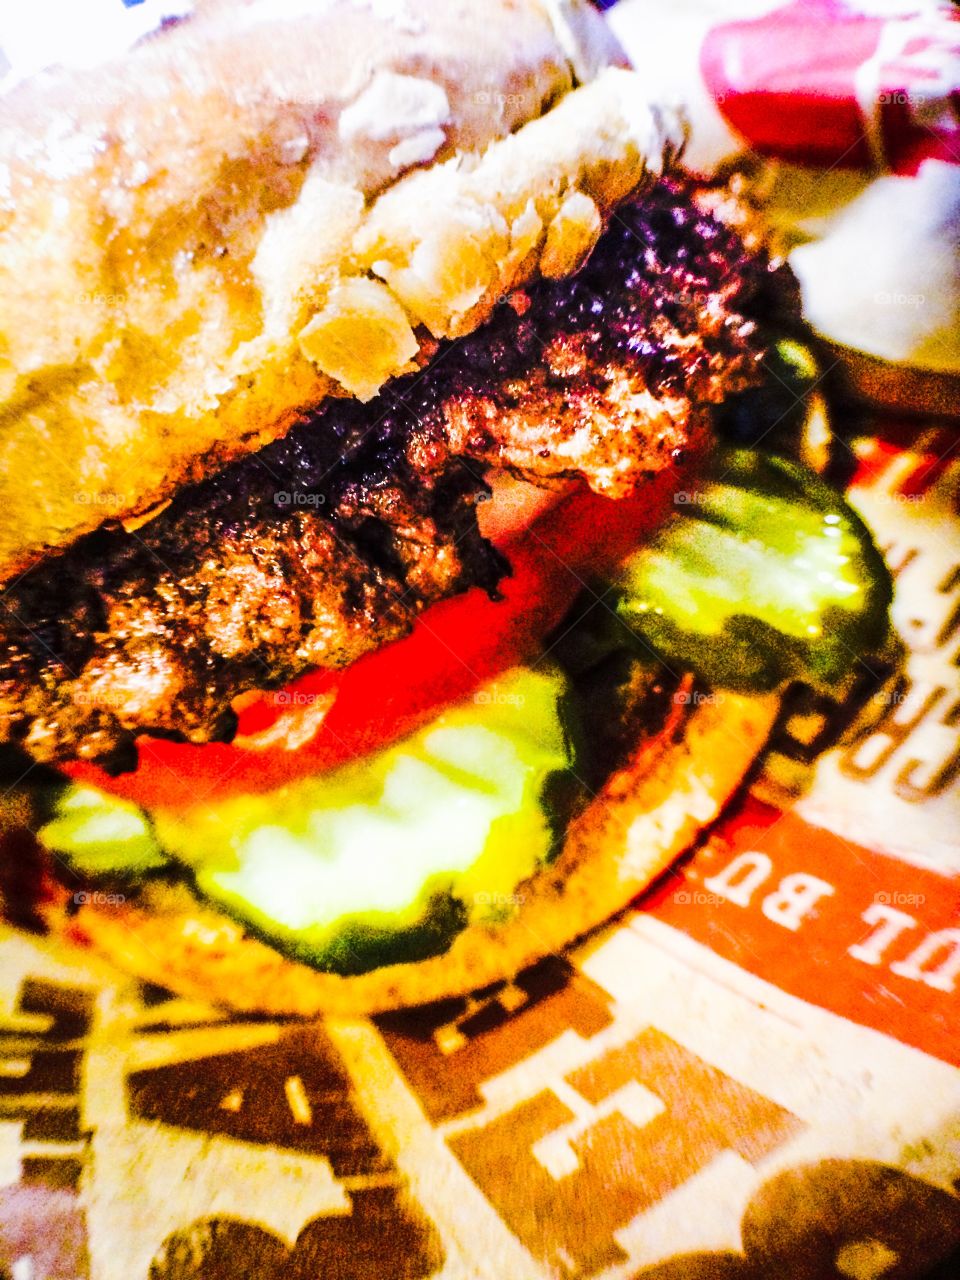 Yummy Epic Burger. Lotsa pickles on a great burger from Epic Burger